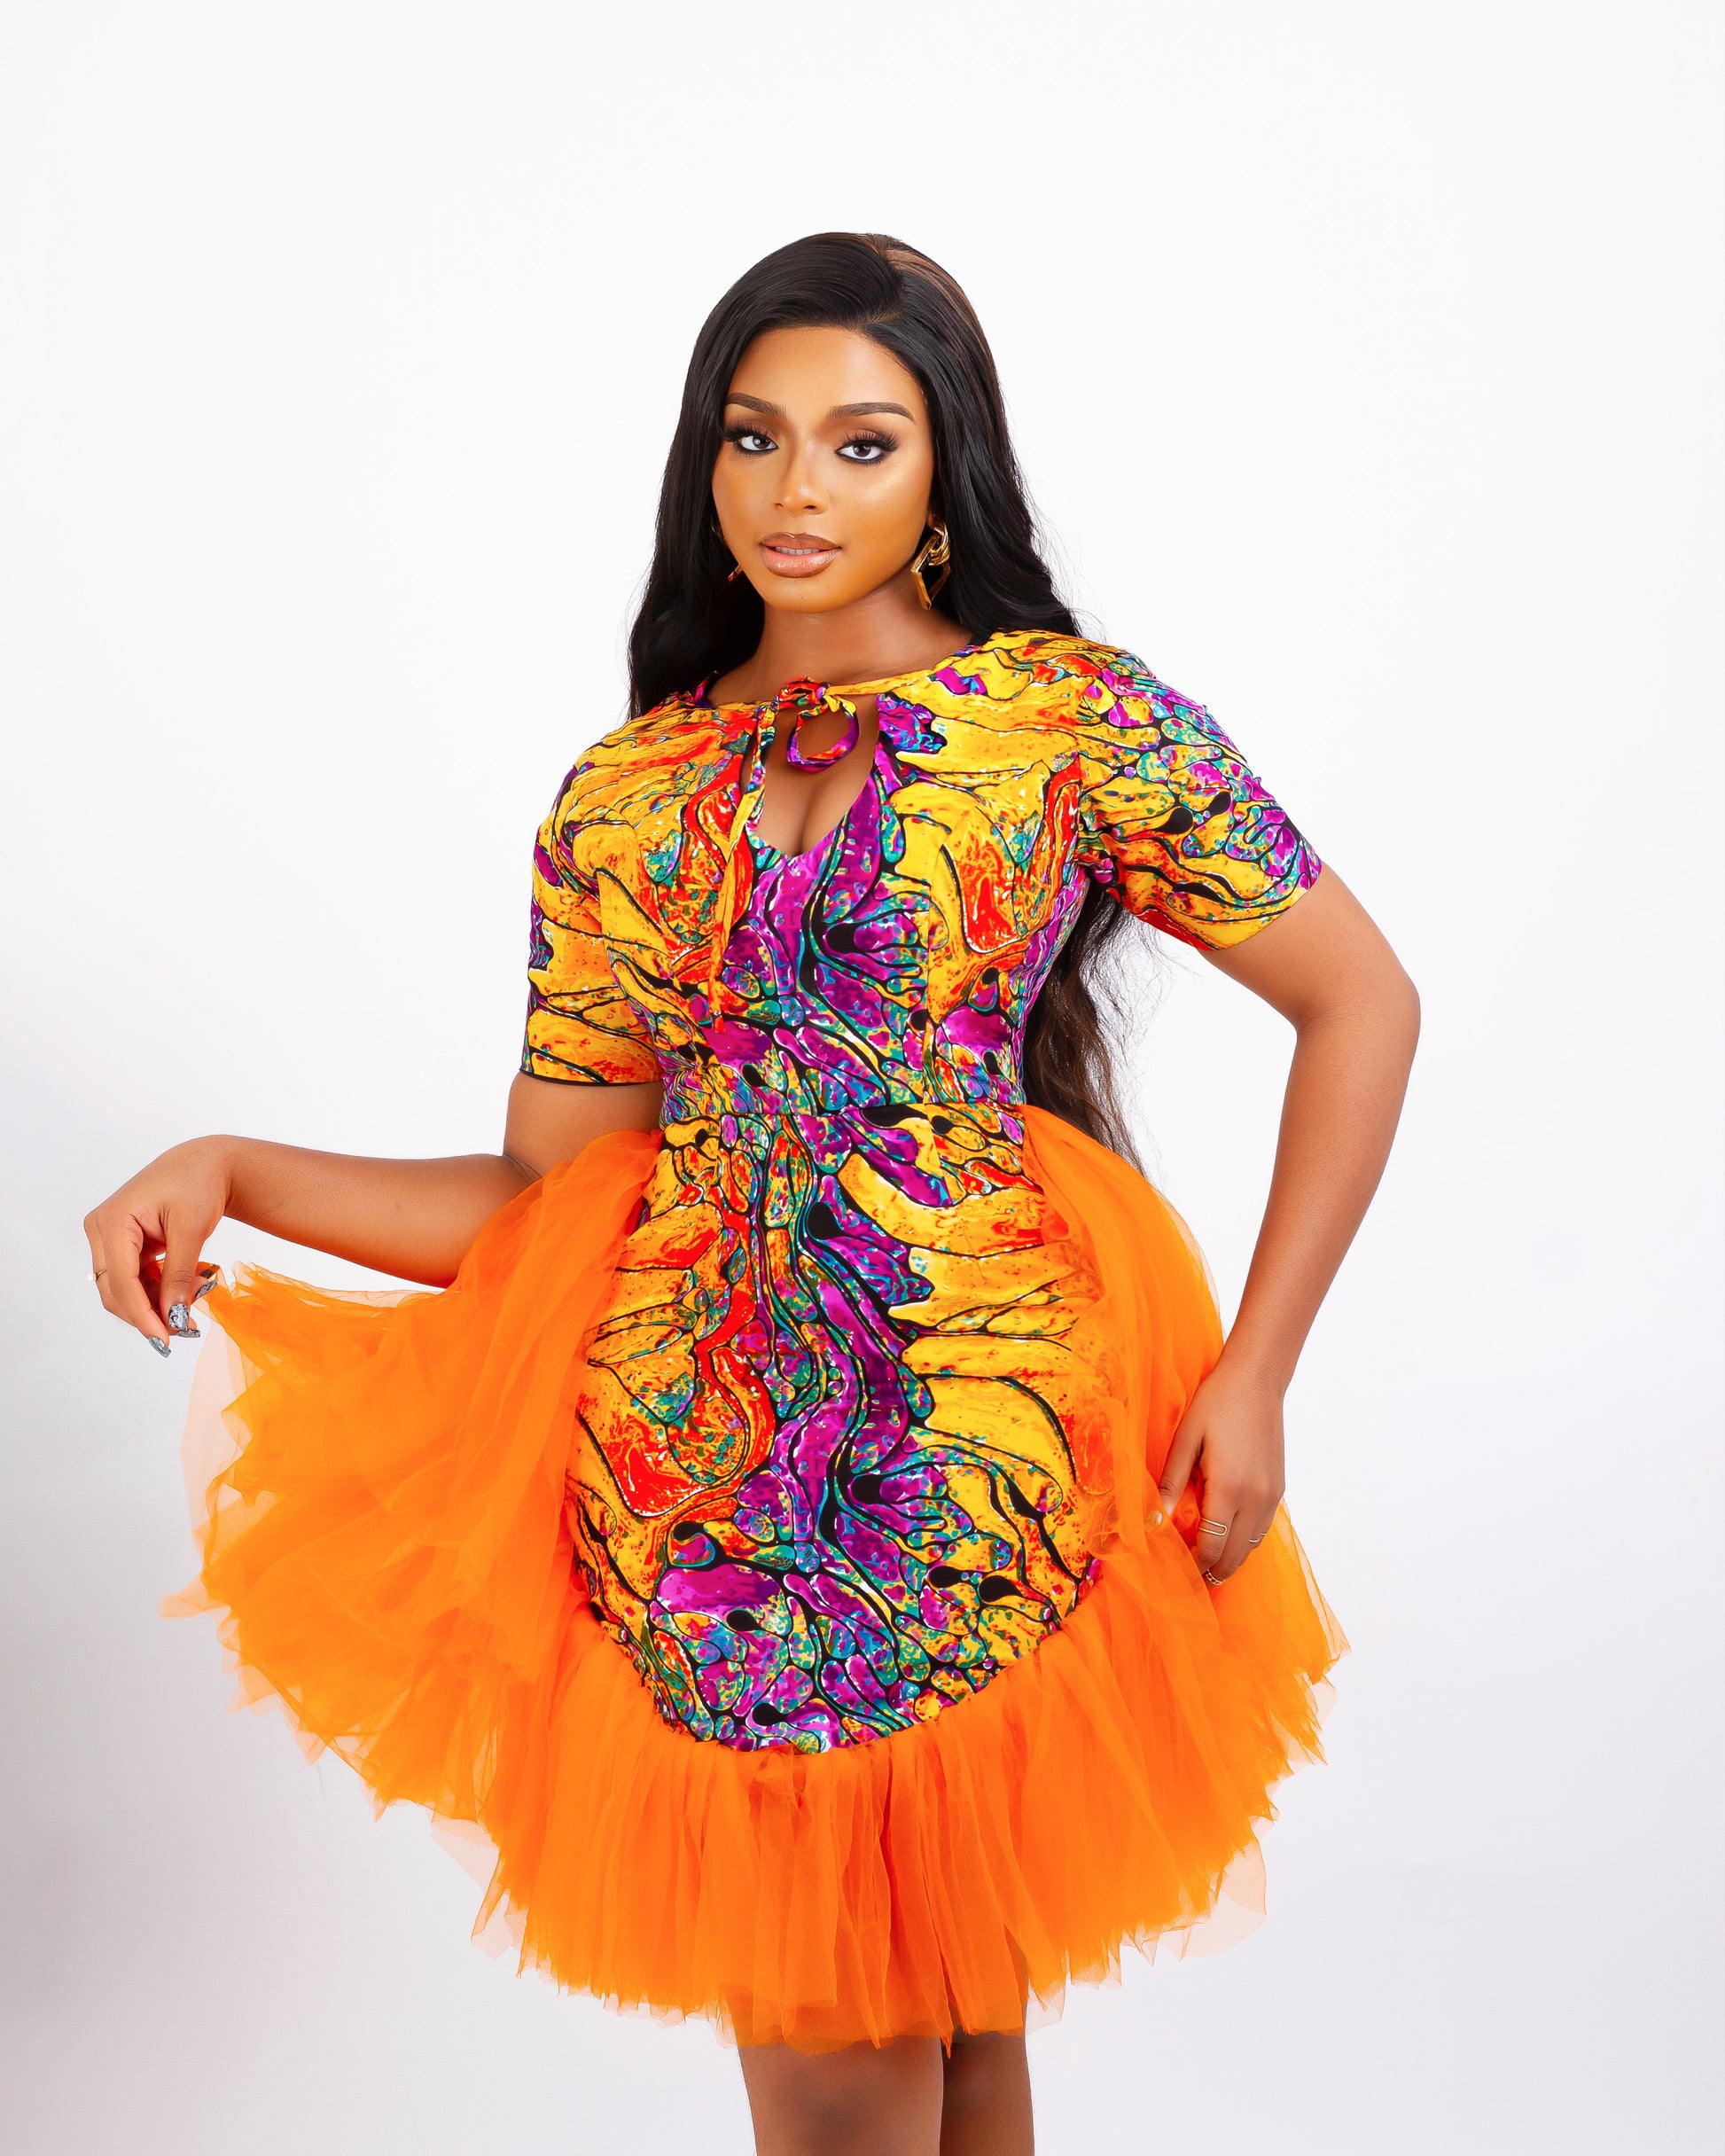 Ankara mini dress, tulle/net details, colorful African print